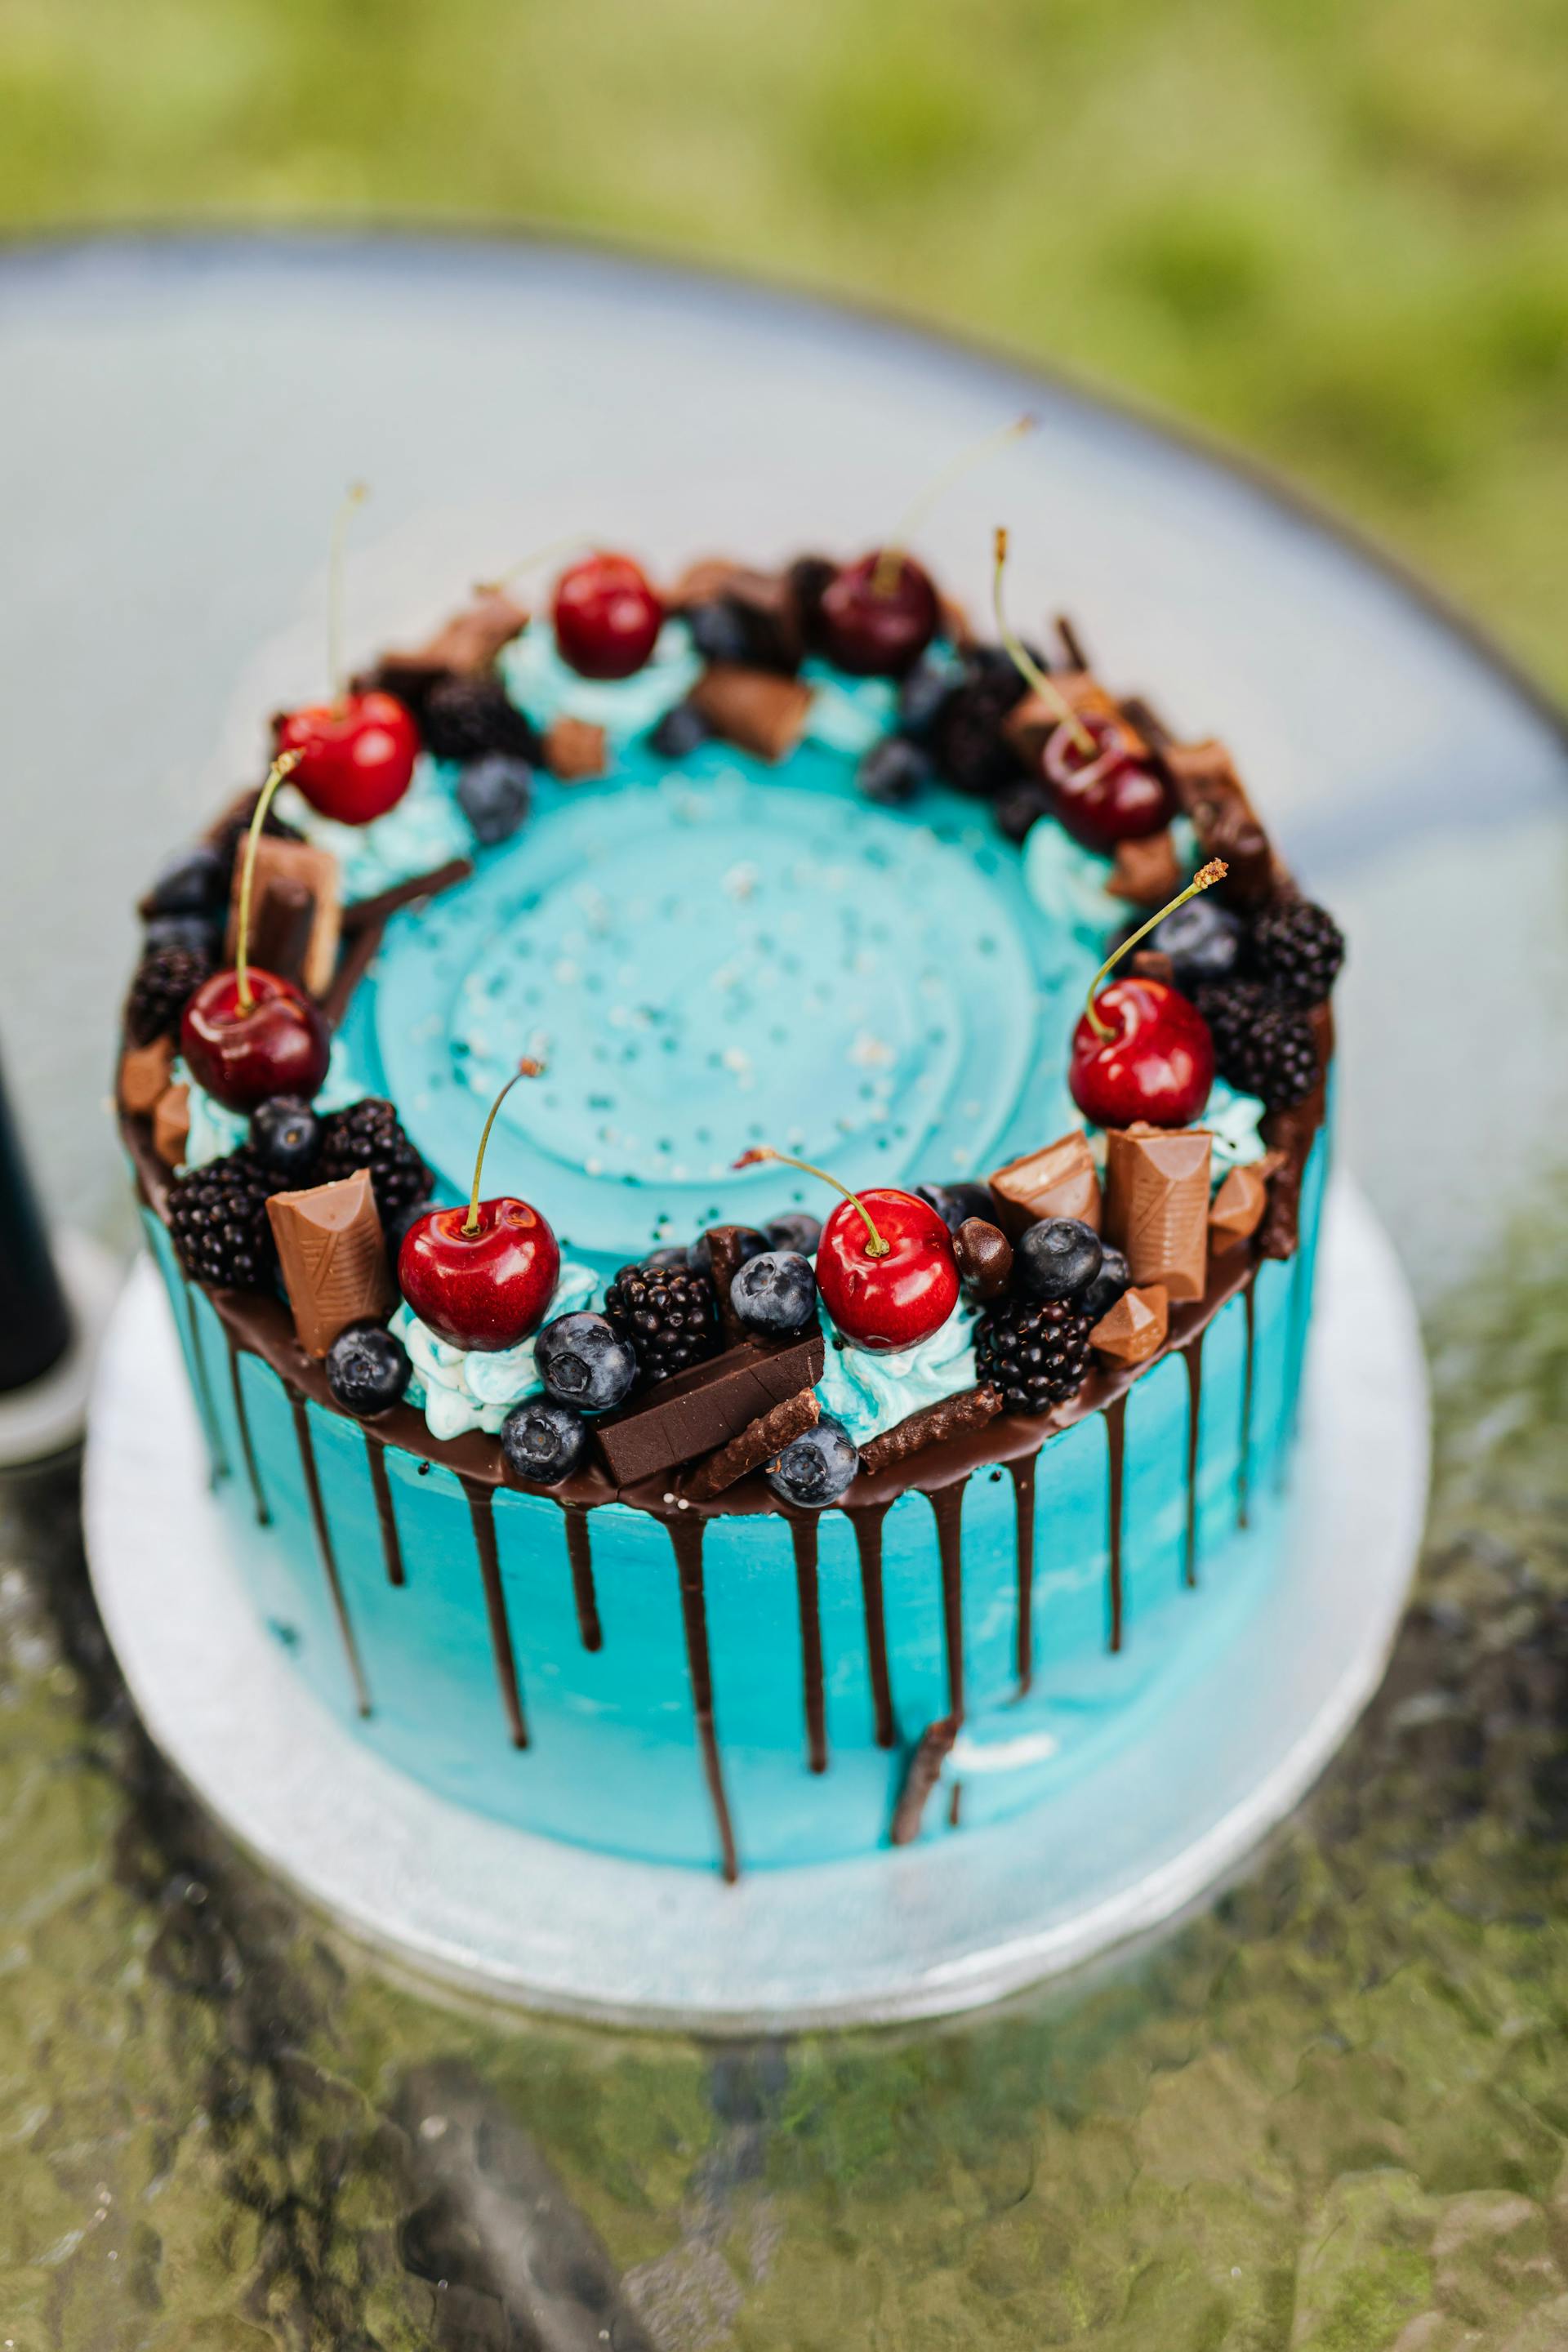 A close-up shot of a cake | Source: Pexels